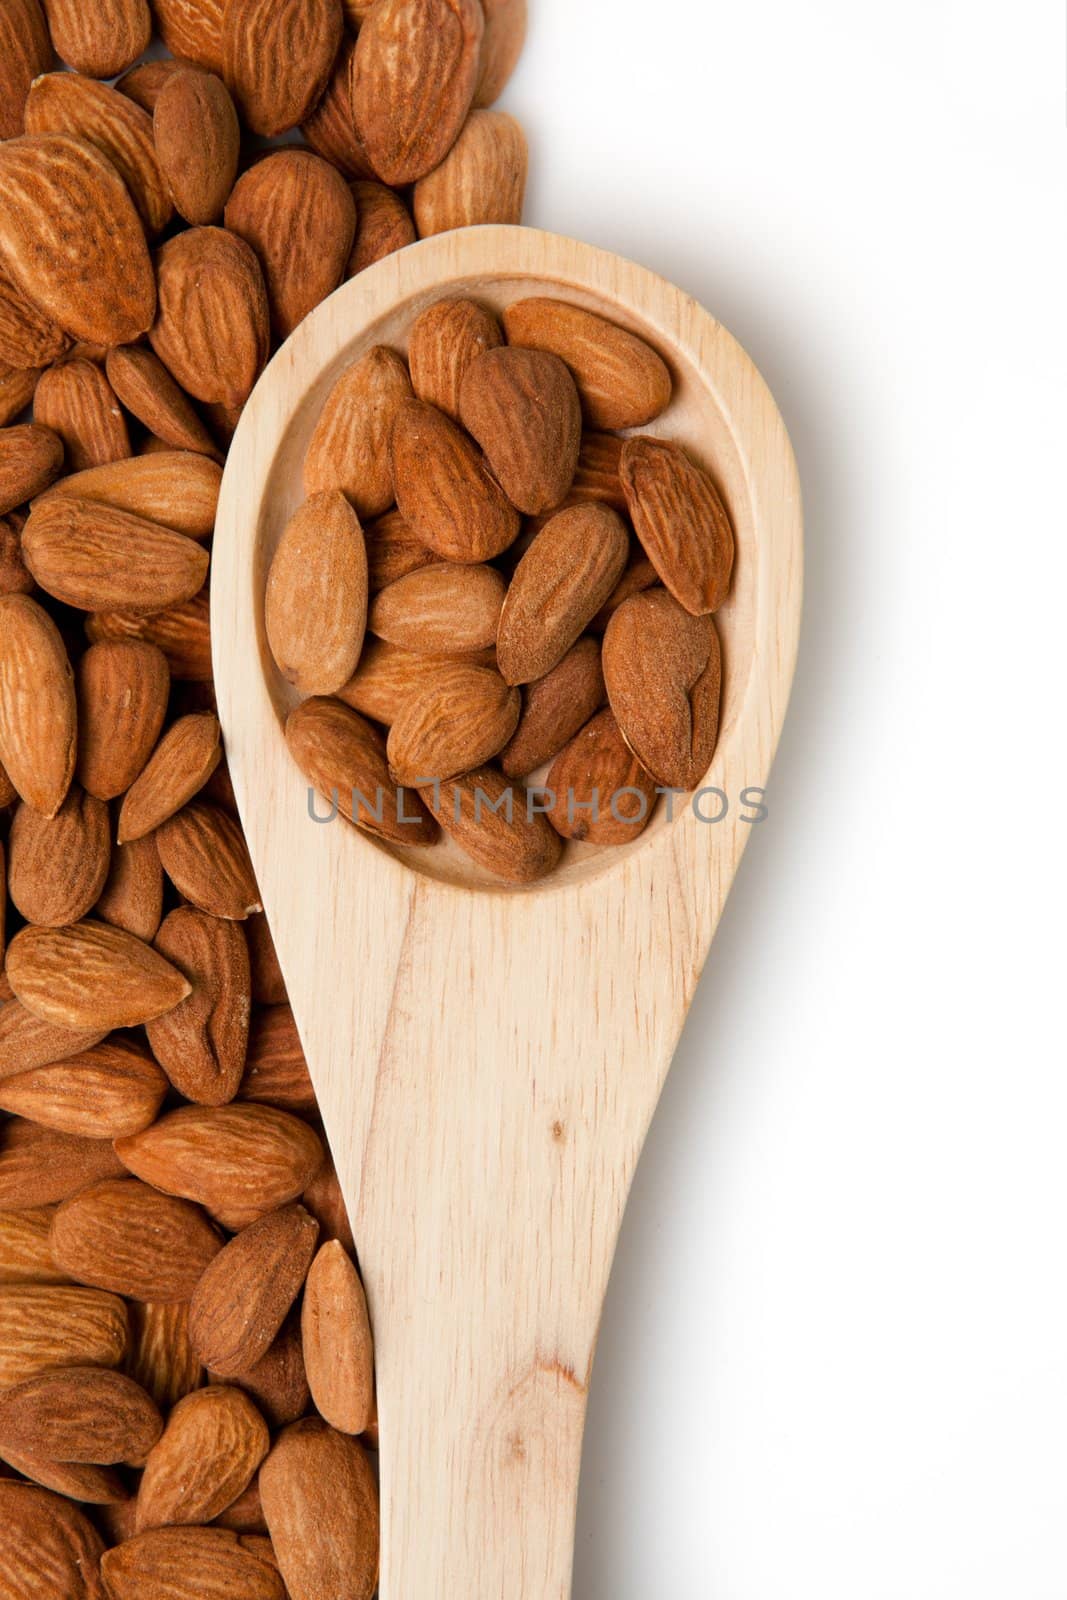 Wooden spoon with almonds by Wavebreakmedia